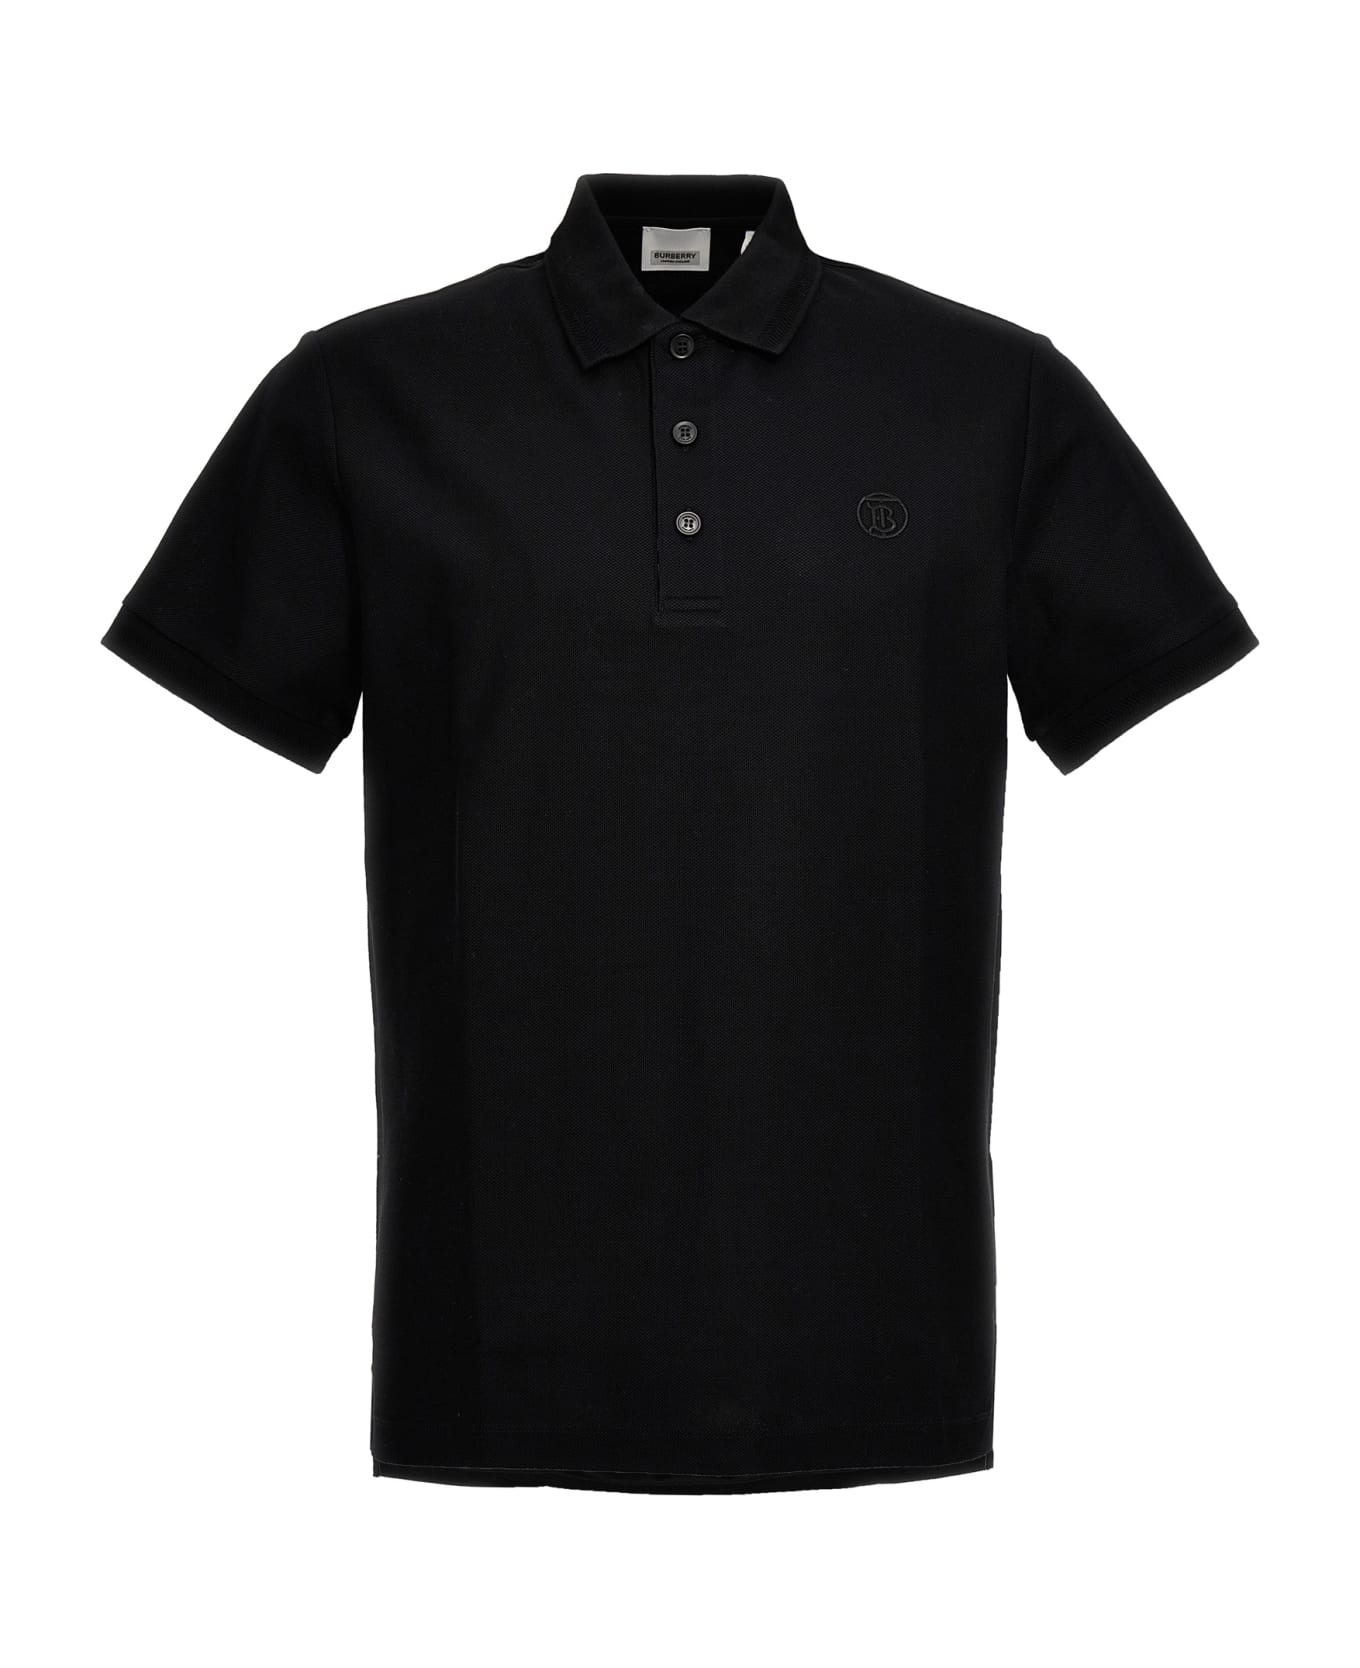 Burberry 'eddie' Polo Long-sleeved Shirt - Black  